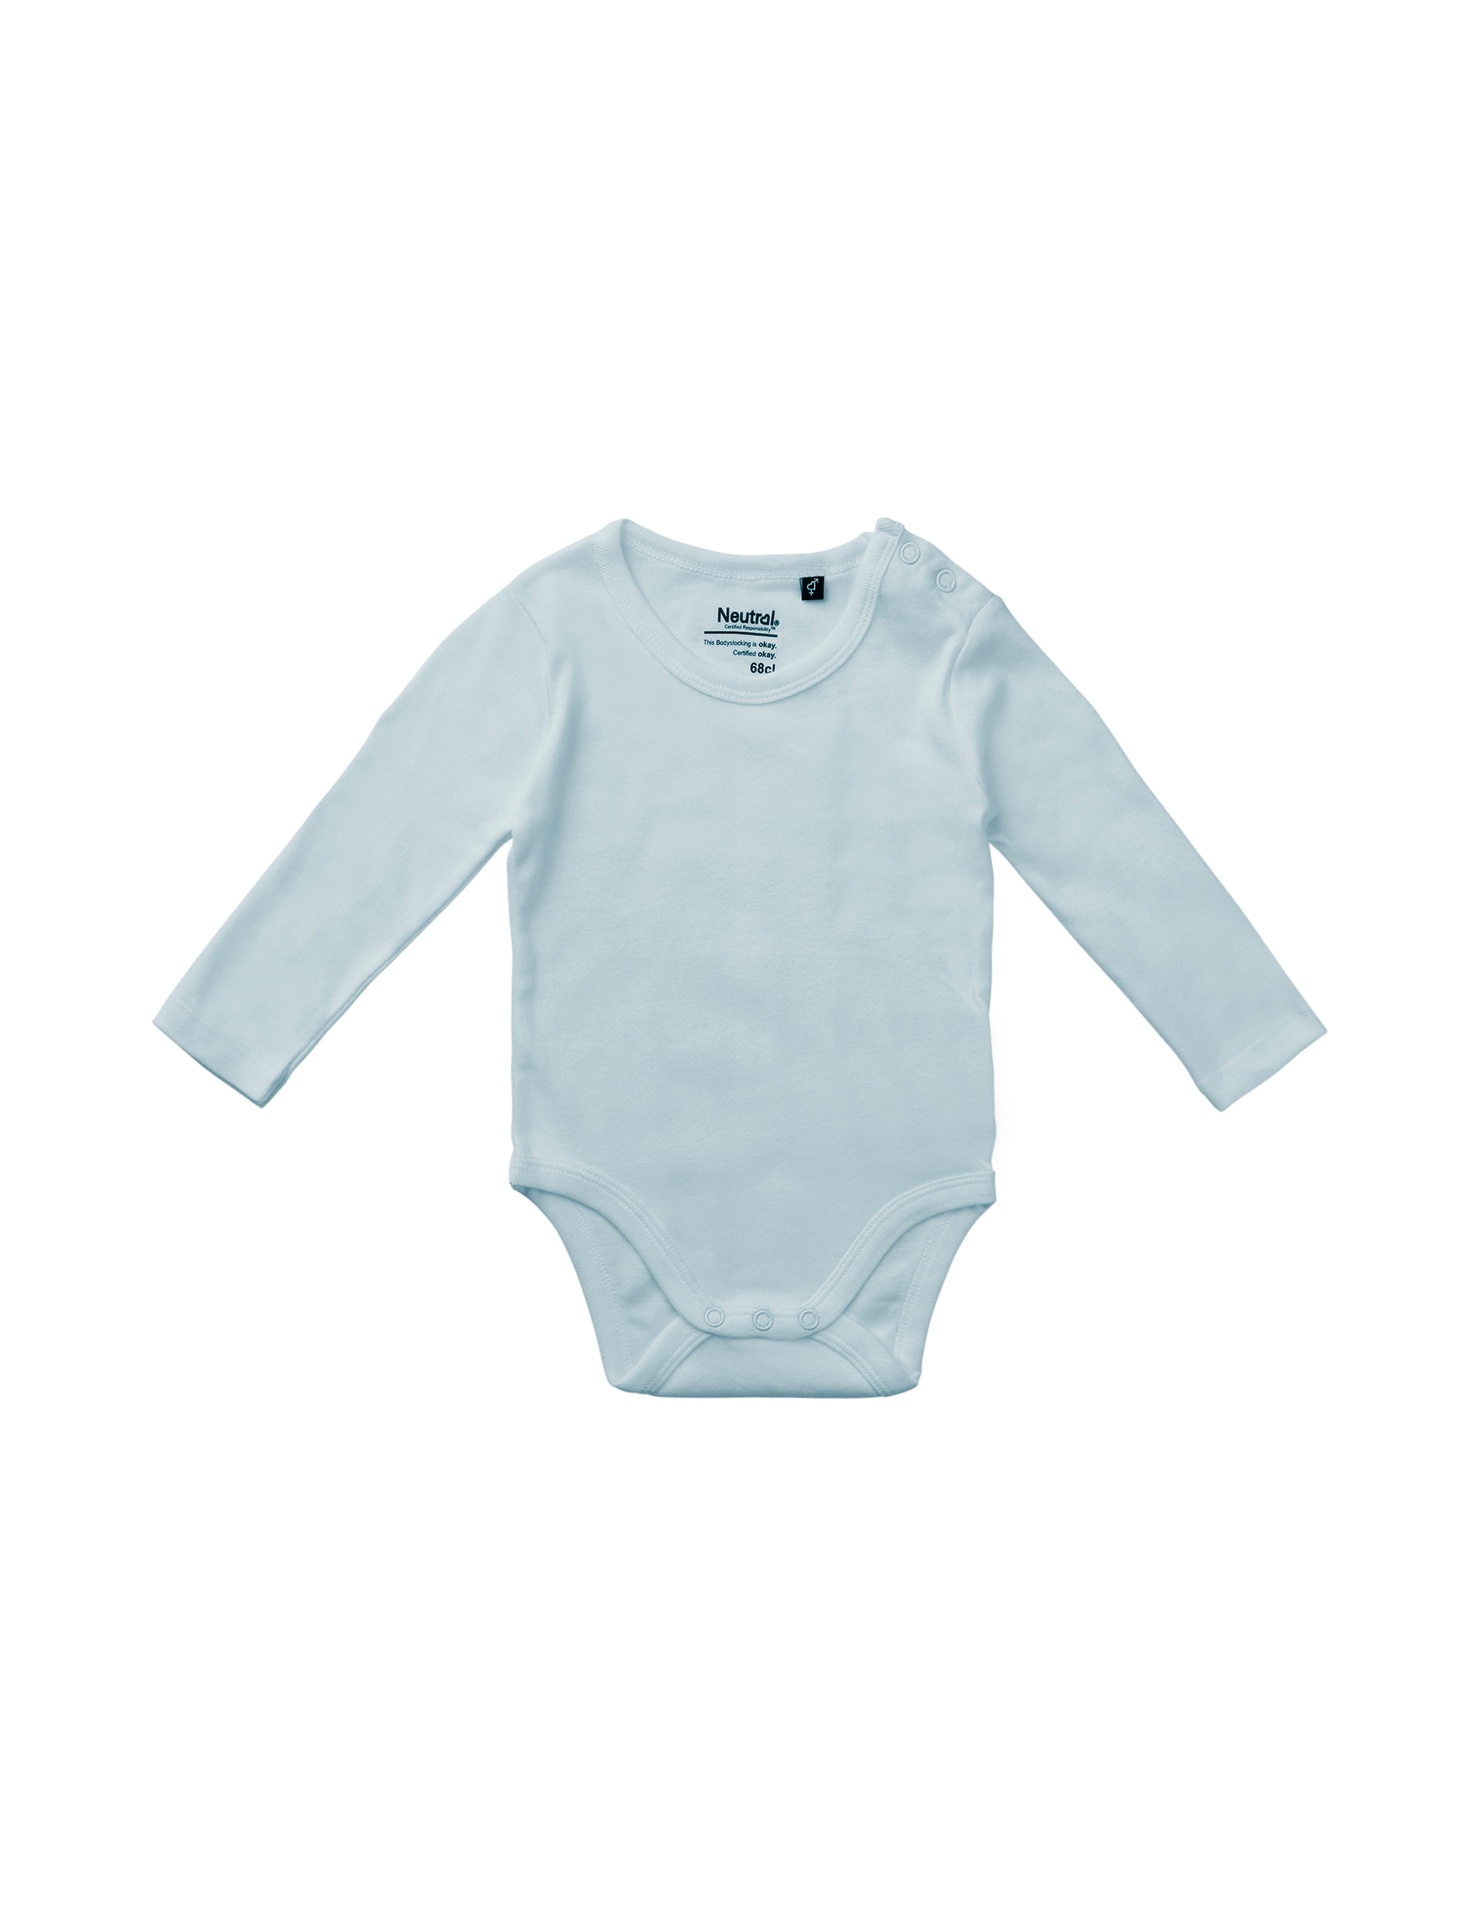 [PR/05757] Babies Long Sleeve Bodystocking (Light Blue 69, 74 cm)